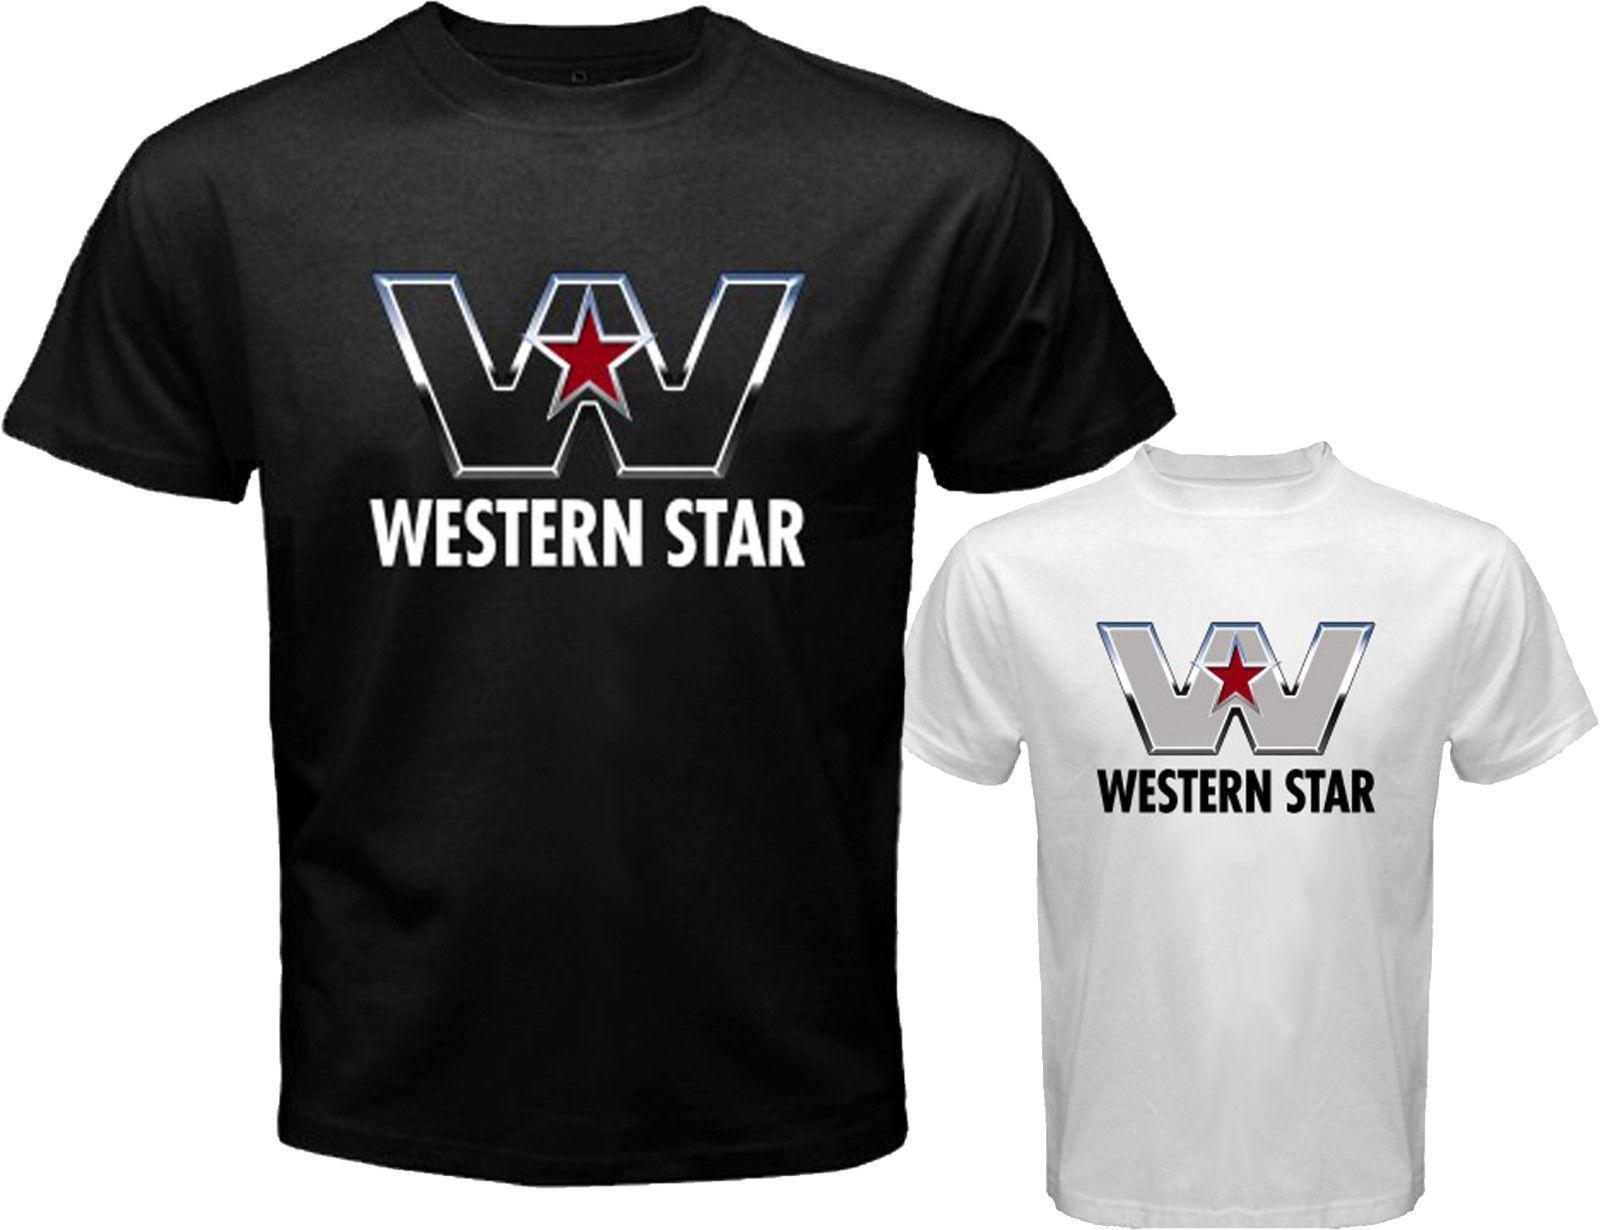 Black and White Western Star Logo - New Western Star Trucks Logo Men'S White Black T Shirt Size S M L XL ...